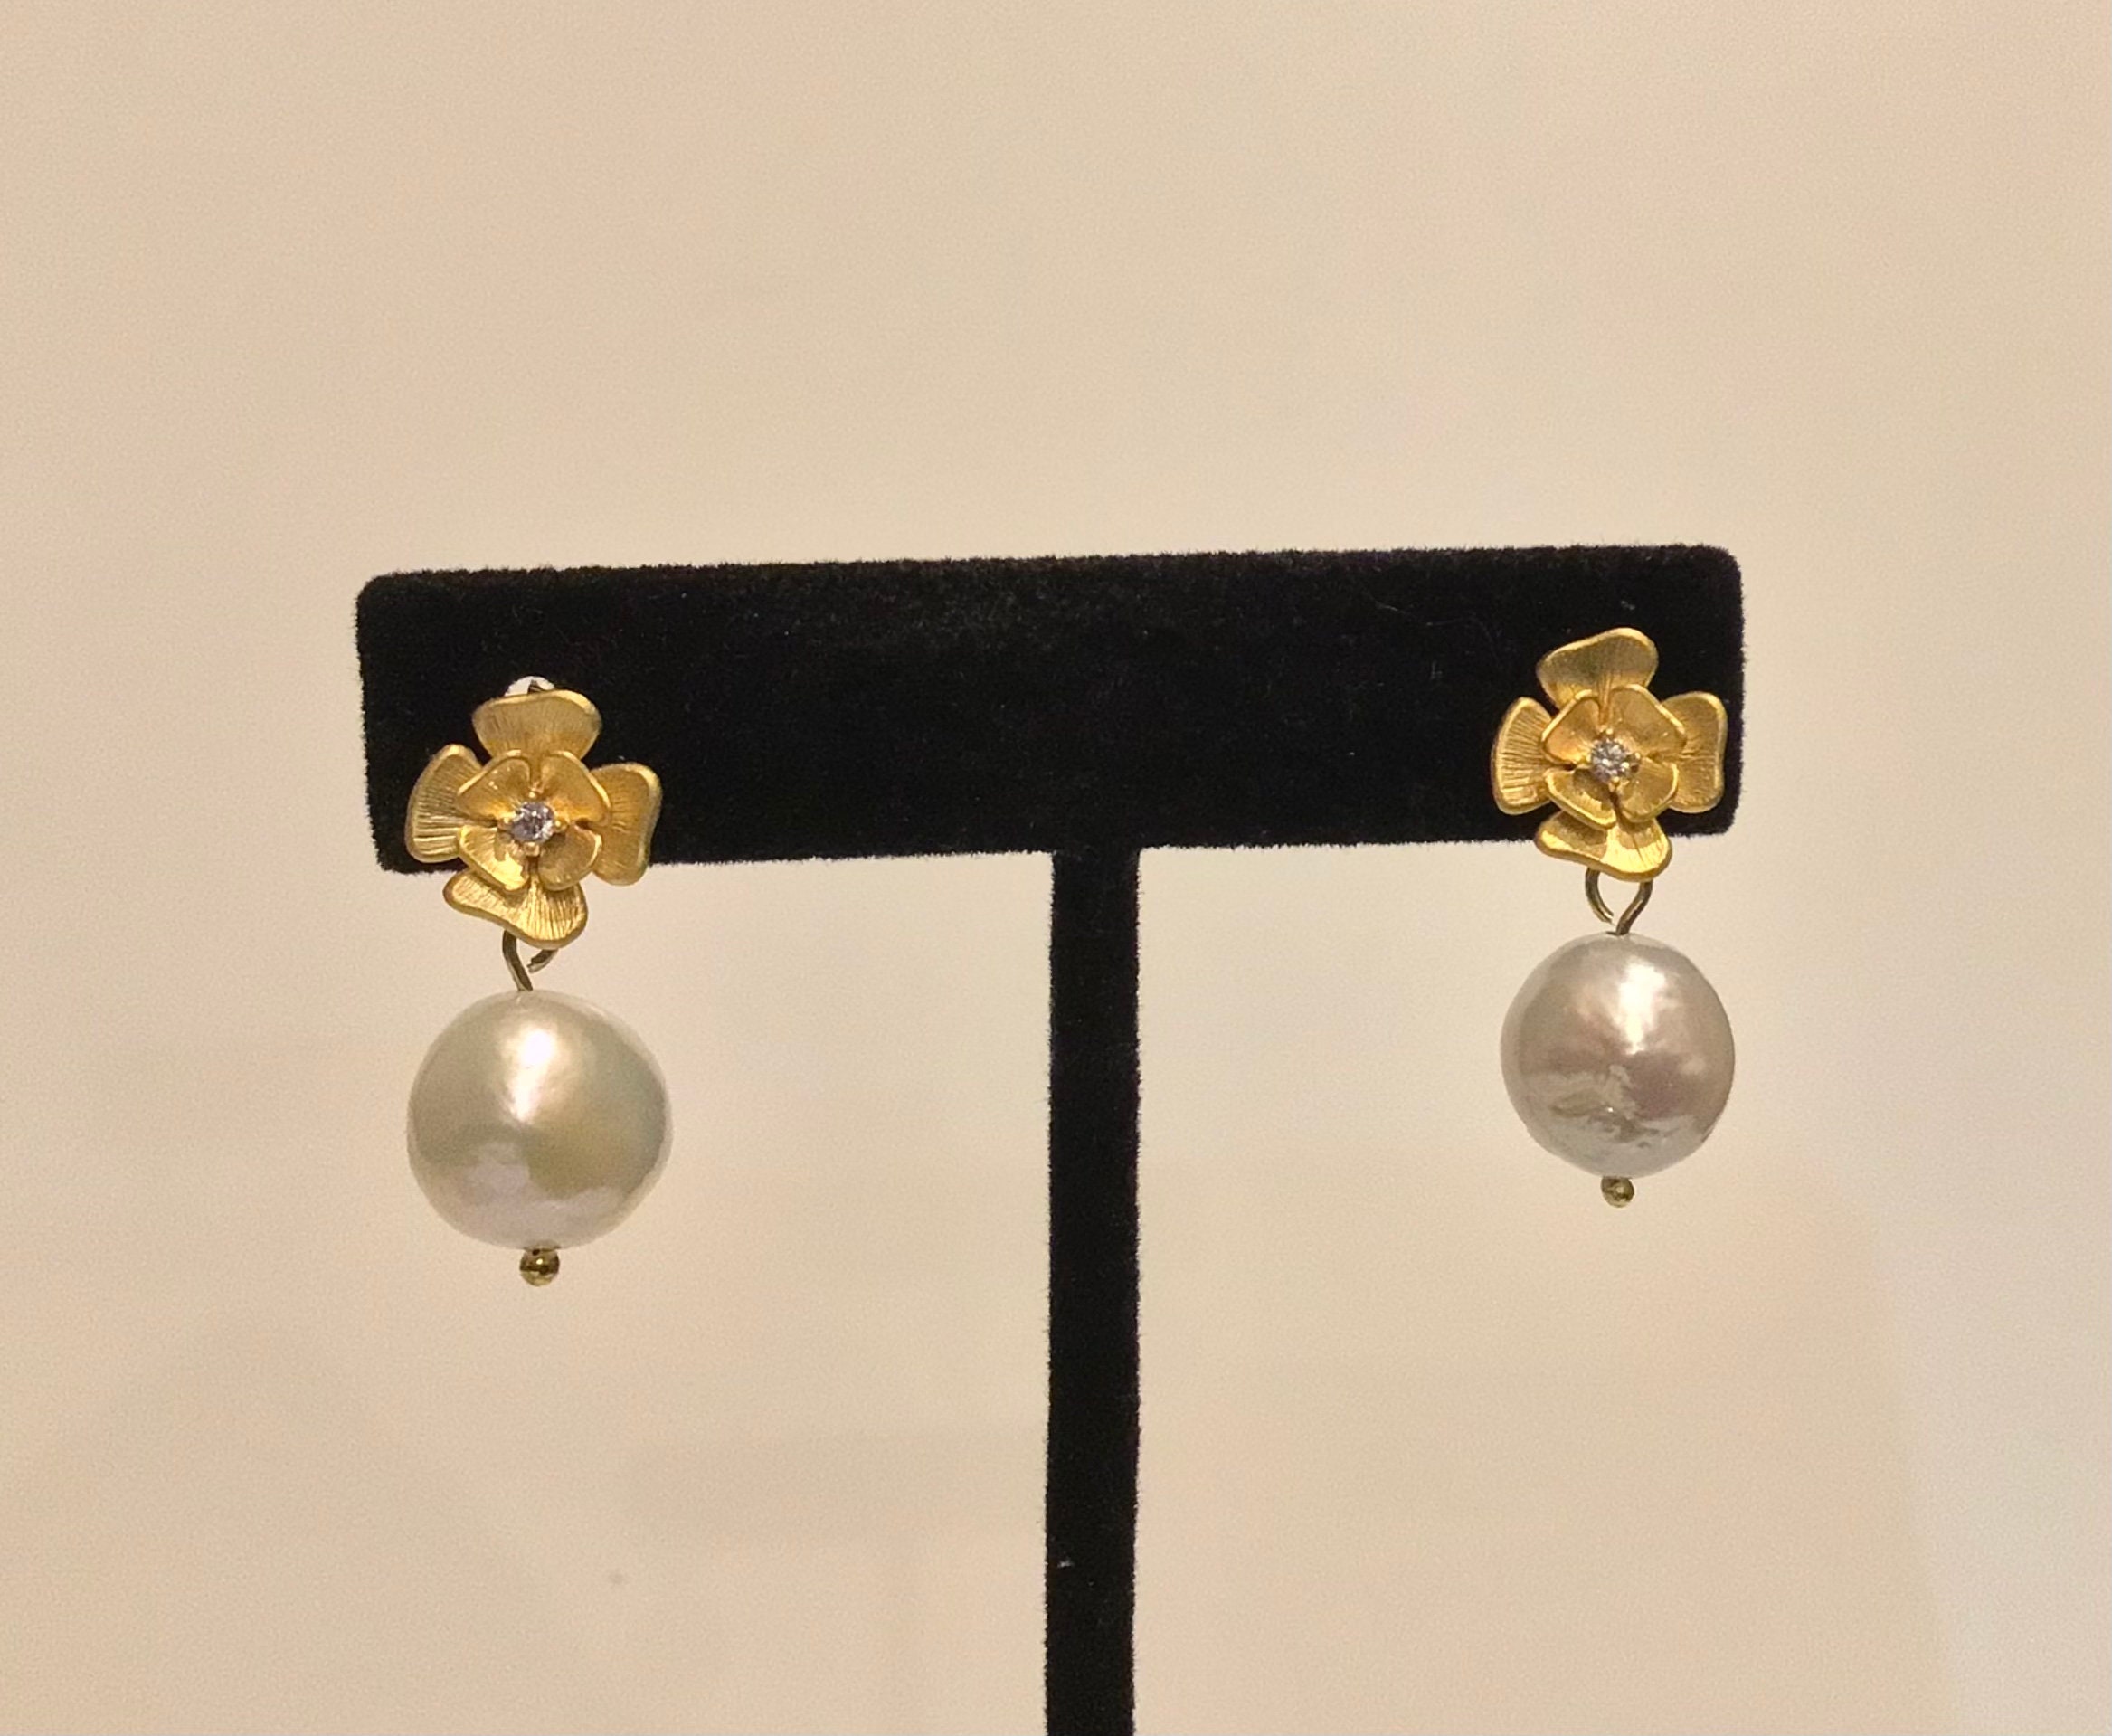 Dogwood Blossom Earrings, medium – Meg By Hand